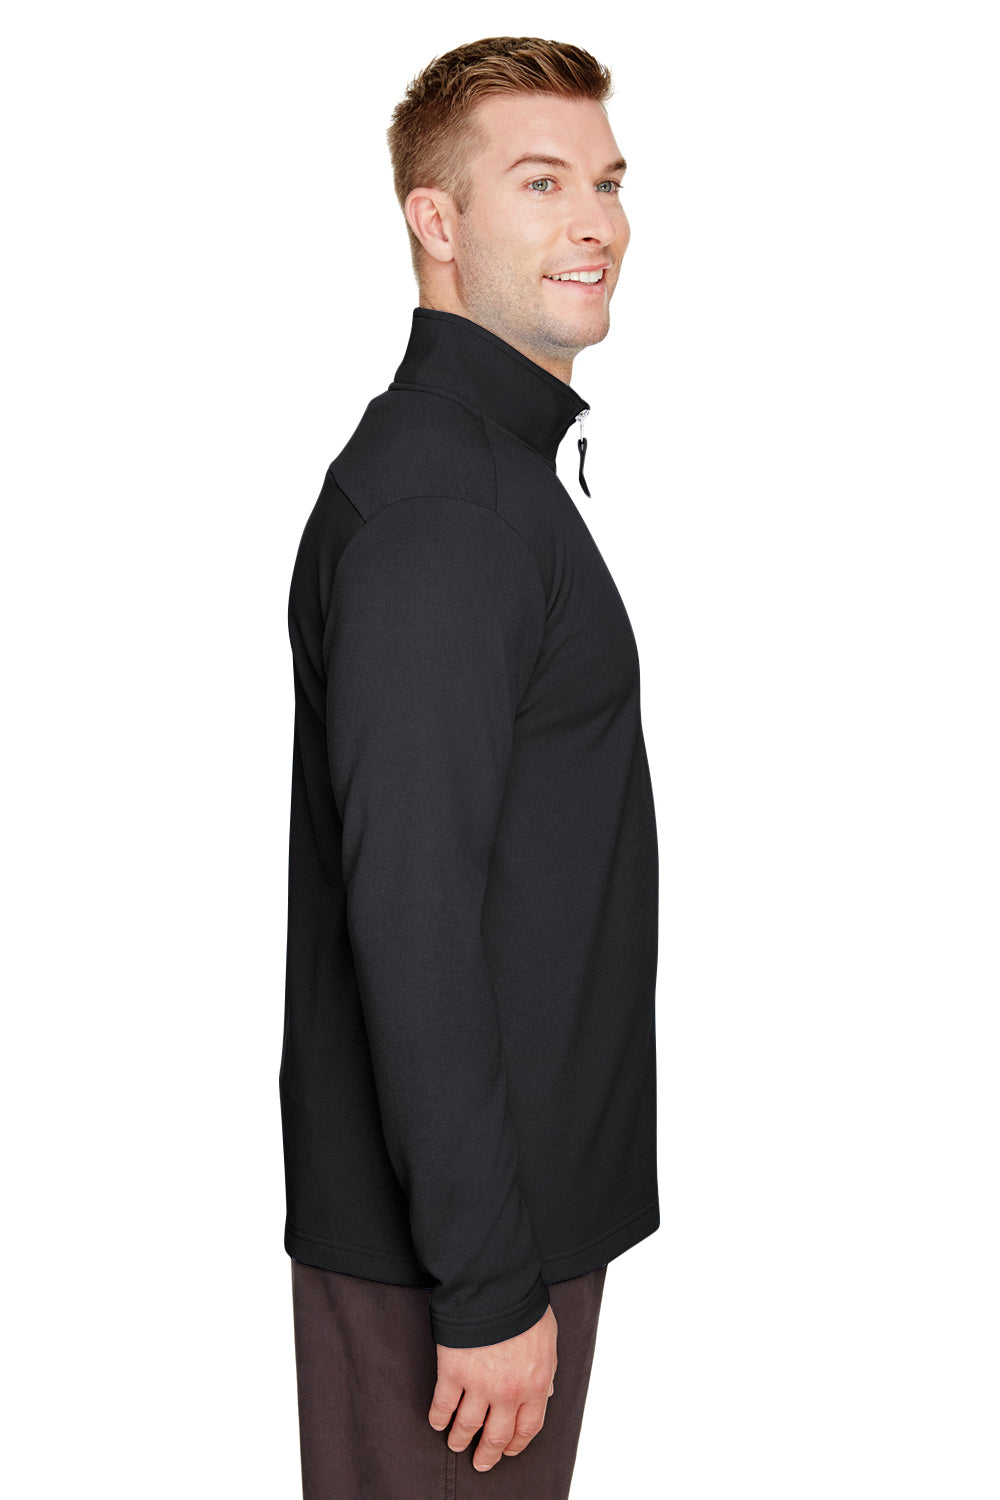 UltraClub UC792 Mens Coastal Performance Moisture Wicking Fleece 1/4 Zip Sweatshirt Black Side